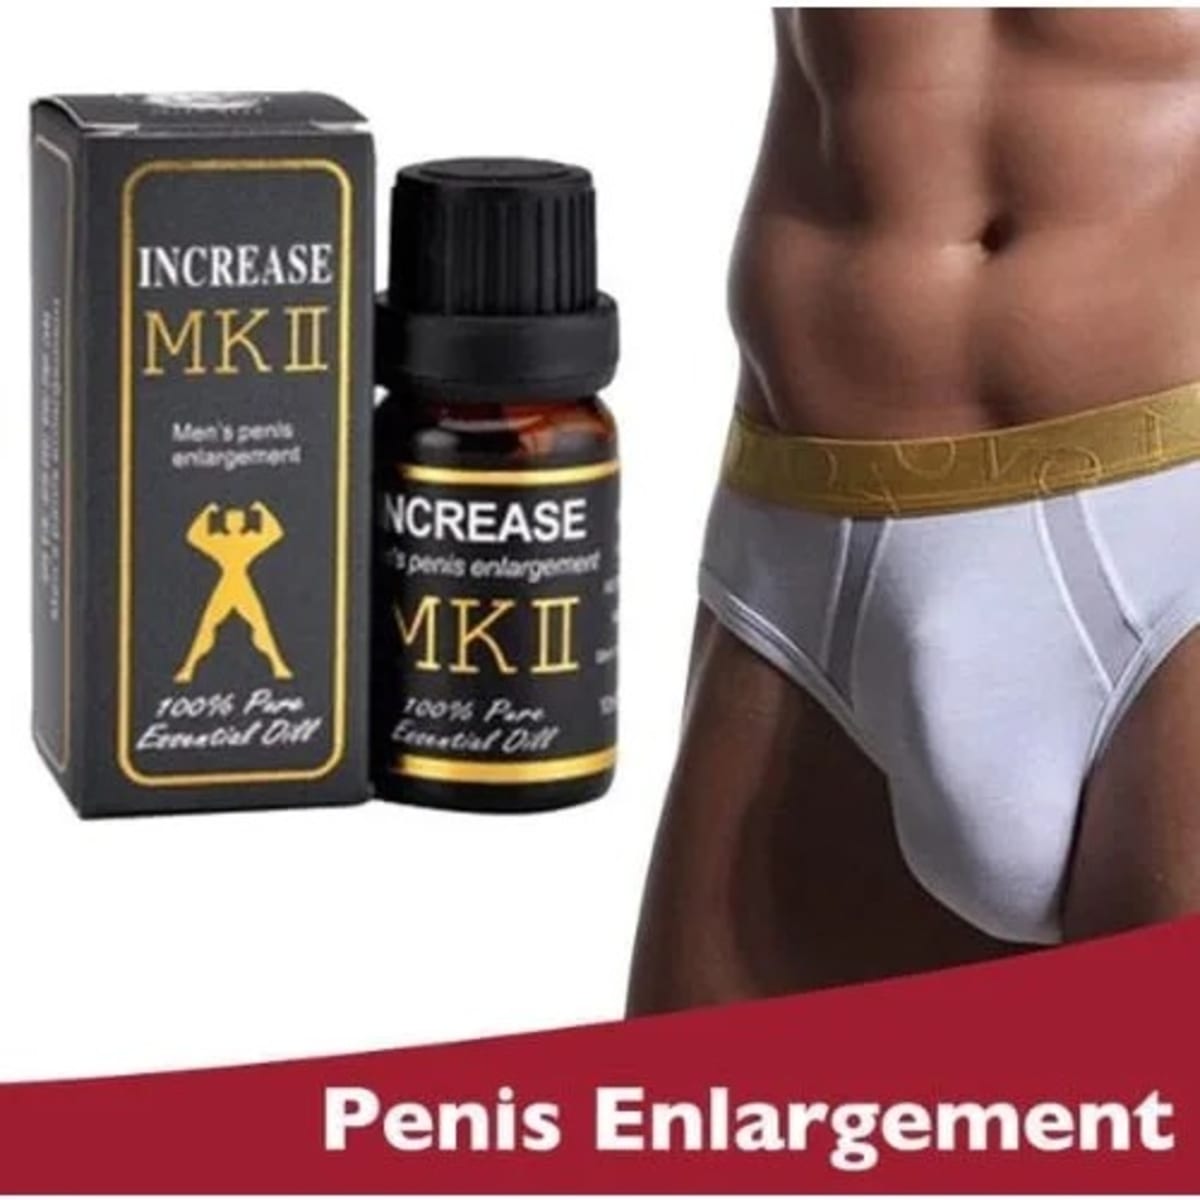 donald hurlbut recommends show me pictures of mens penises pic